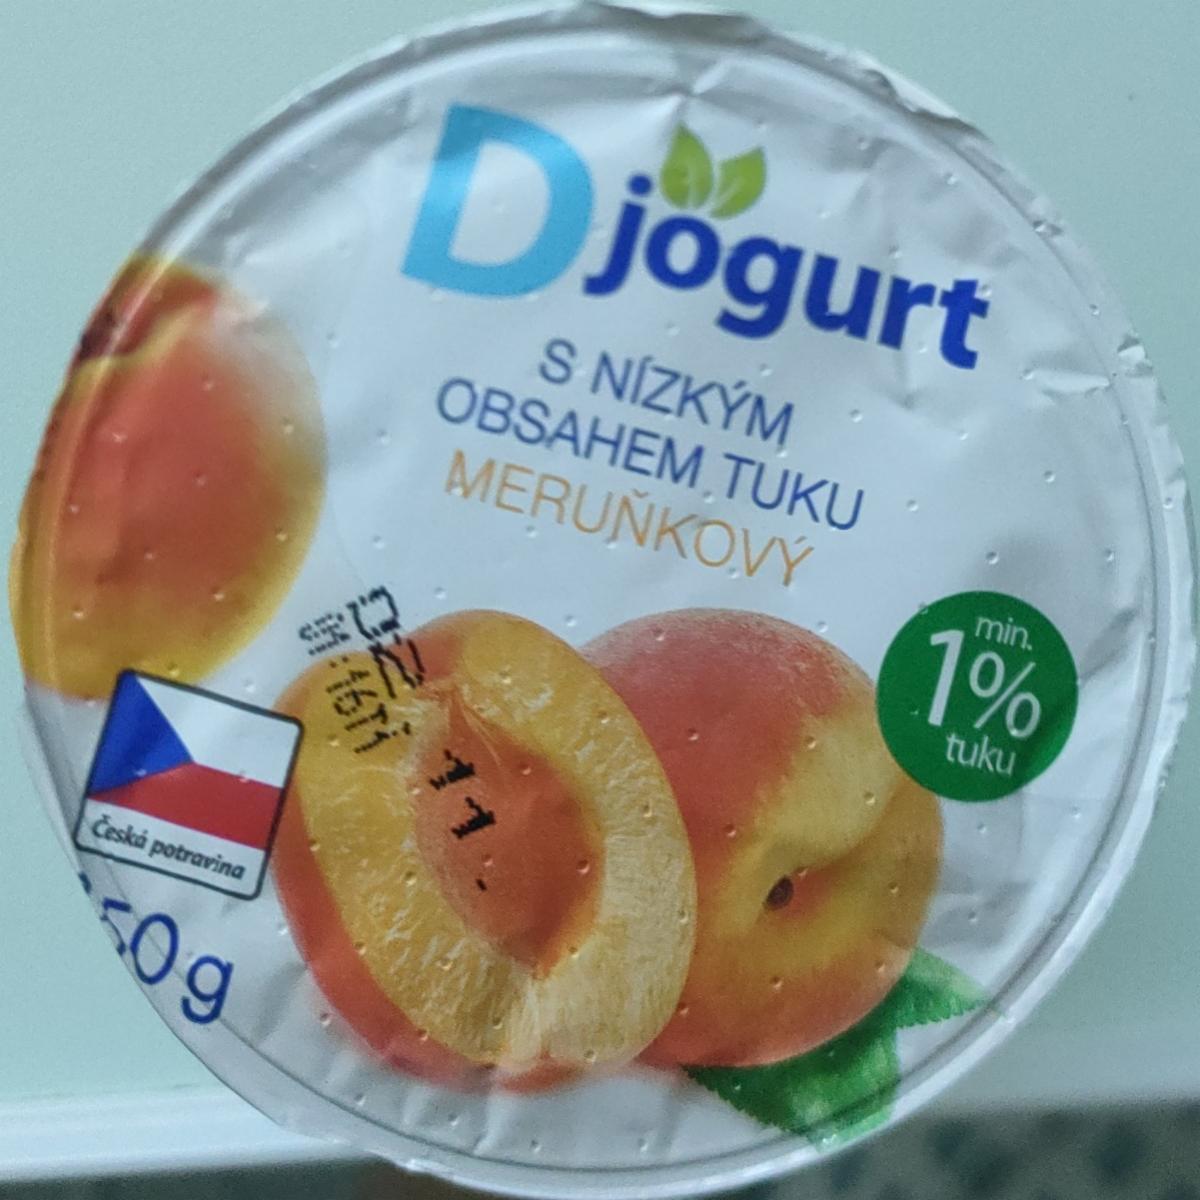 Fotografie - D jogurt meruňkový s nízkým obsahem tuku